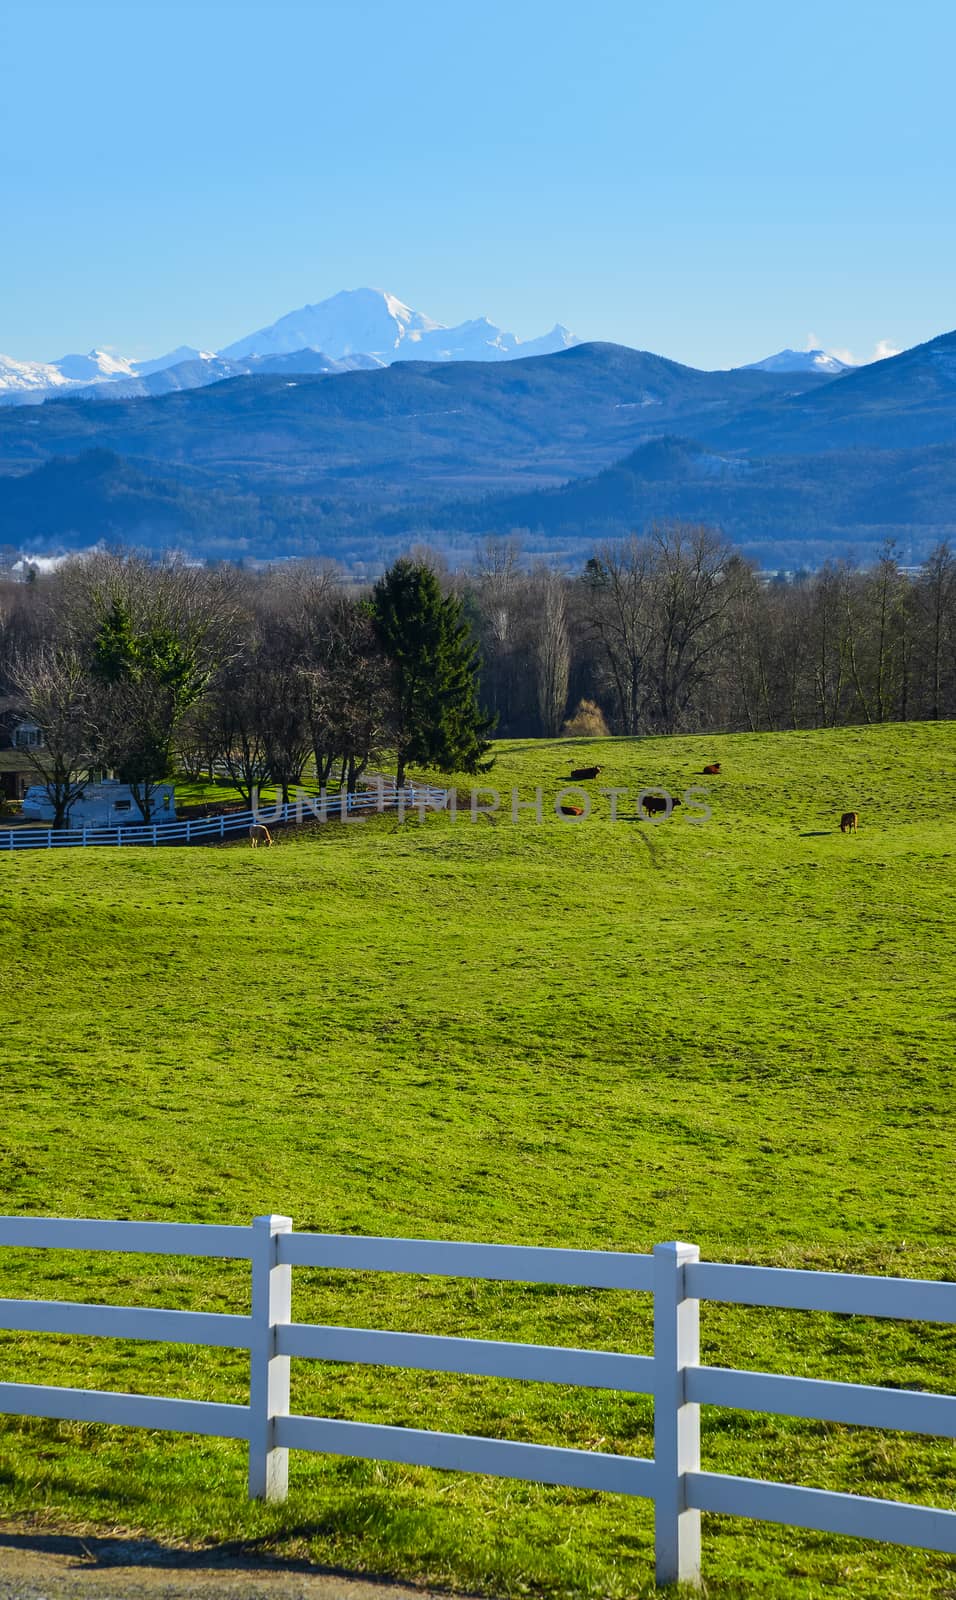 Winter season on cattle farm in a valley. Cattle farm field behind the fence by Imagenet